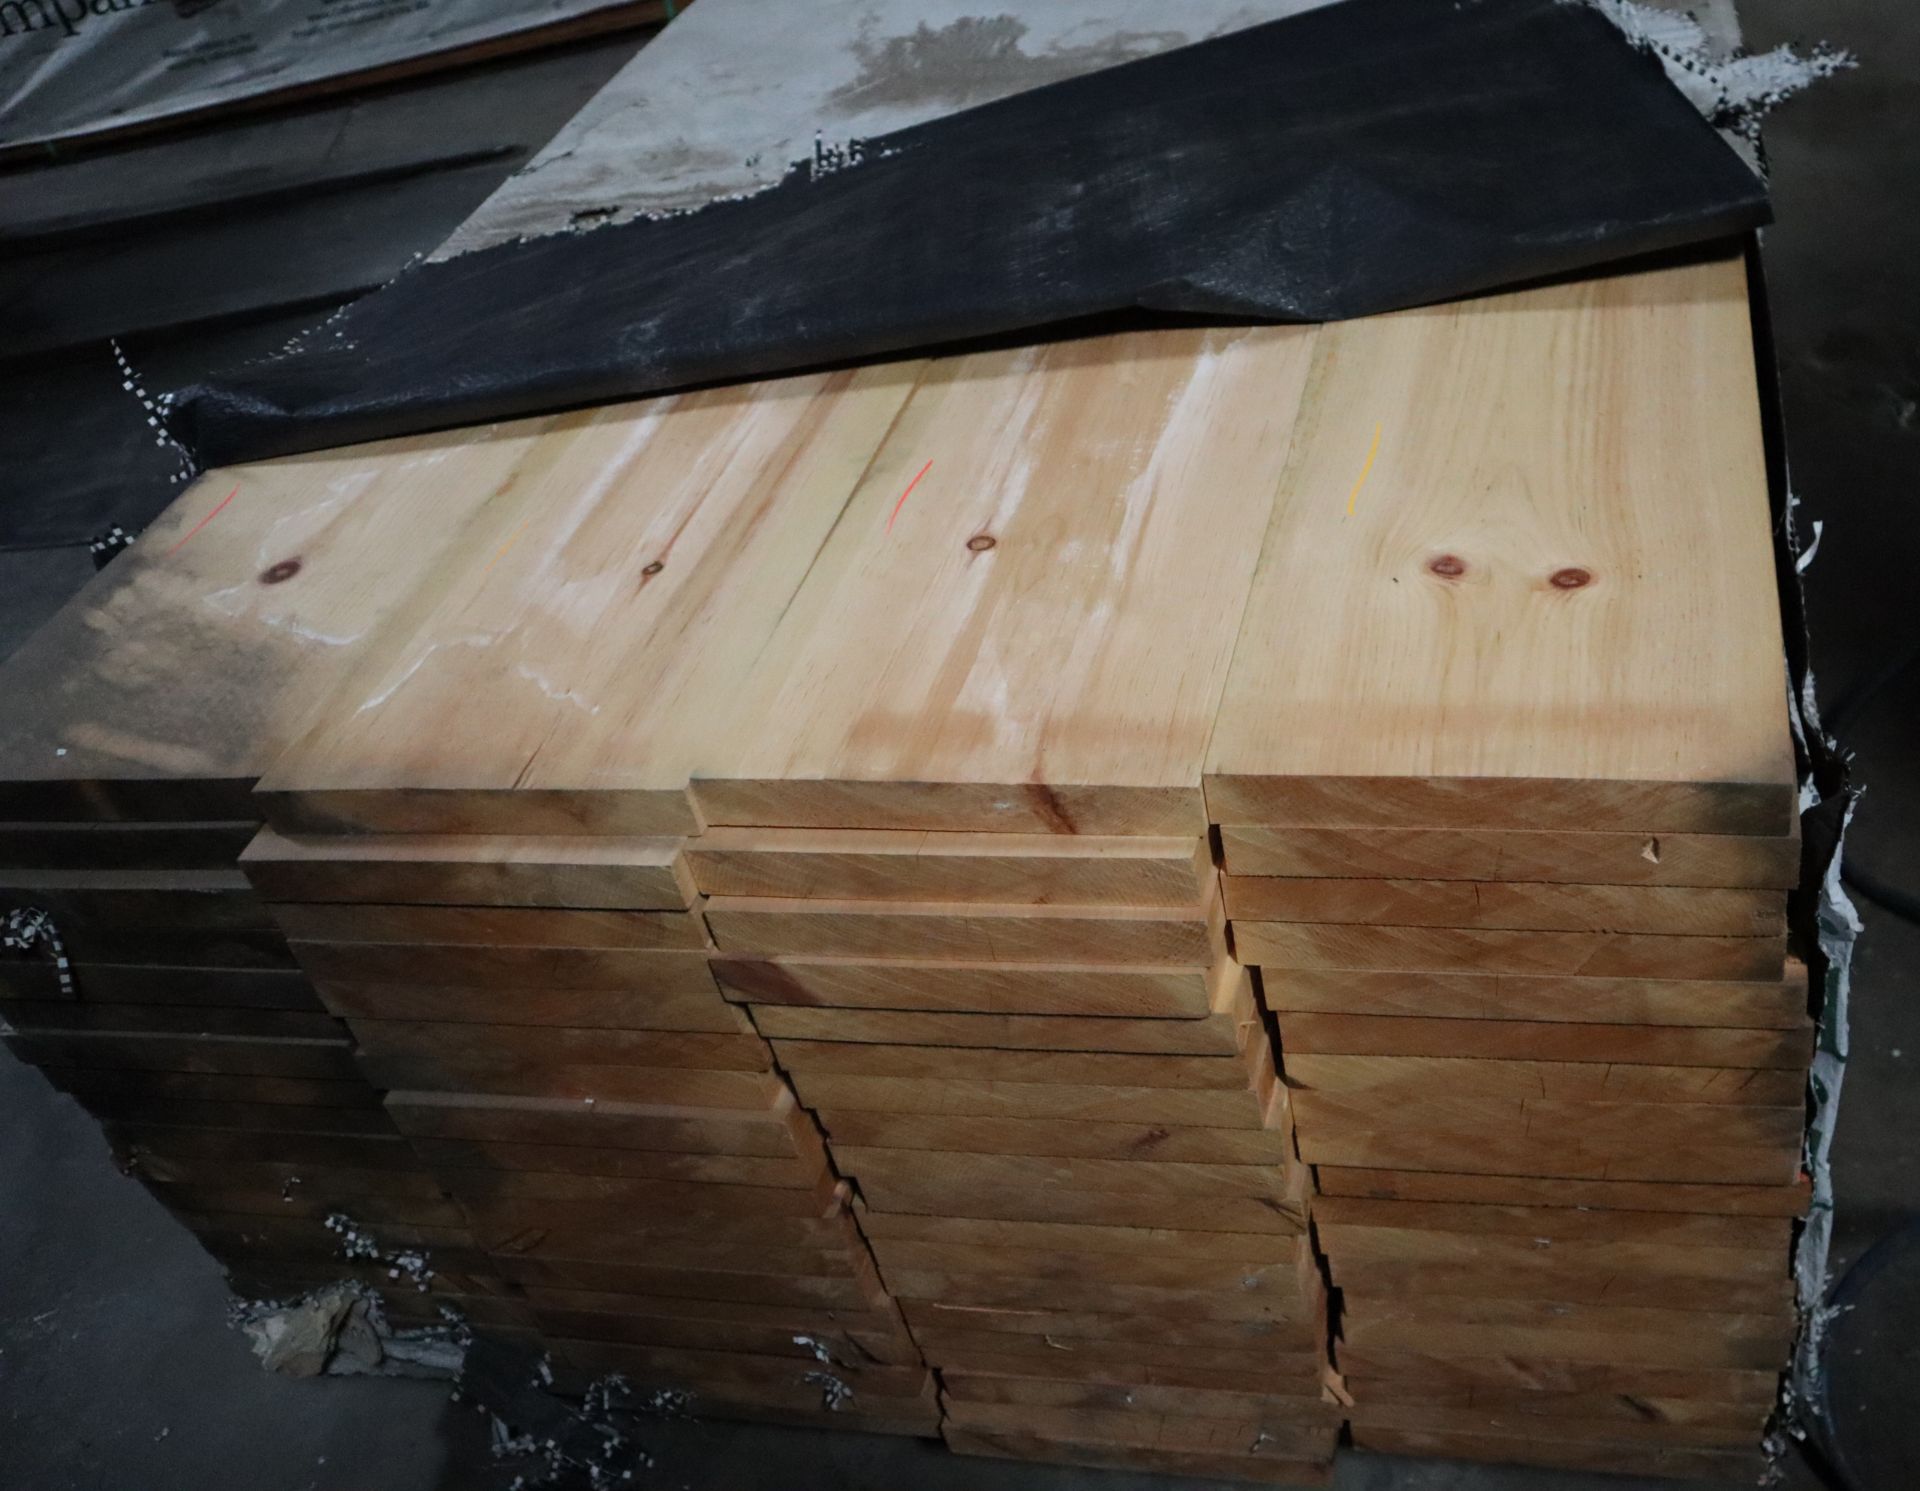 1,360 BFT #2 & Btr Sugar Pine, Kiln Dried, S2S-HV 5/4x12"x16' - Image 3 of 6